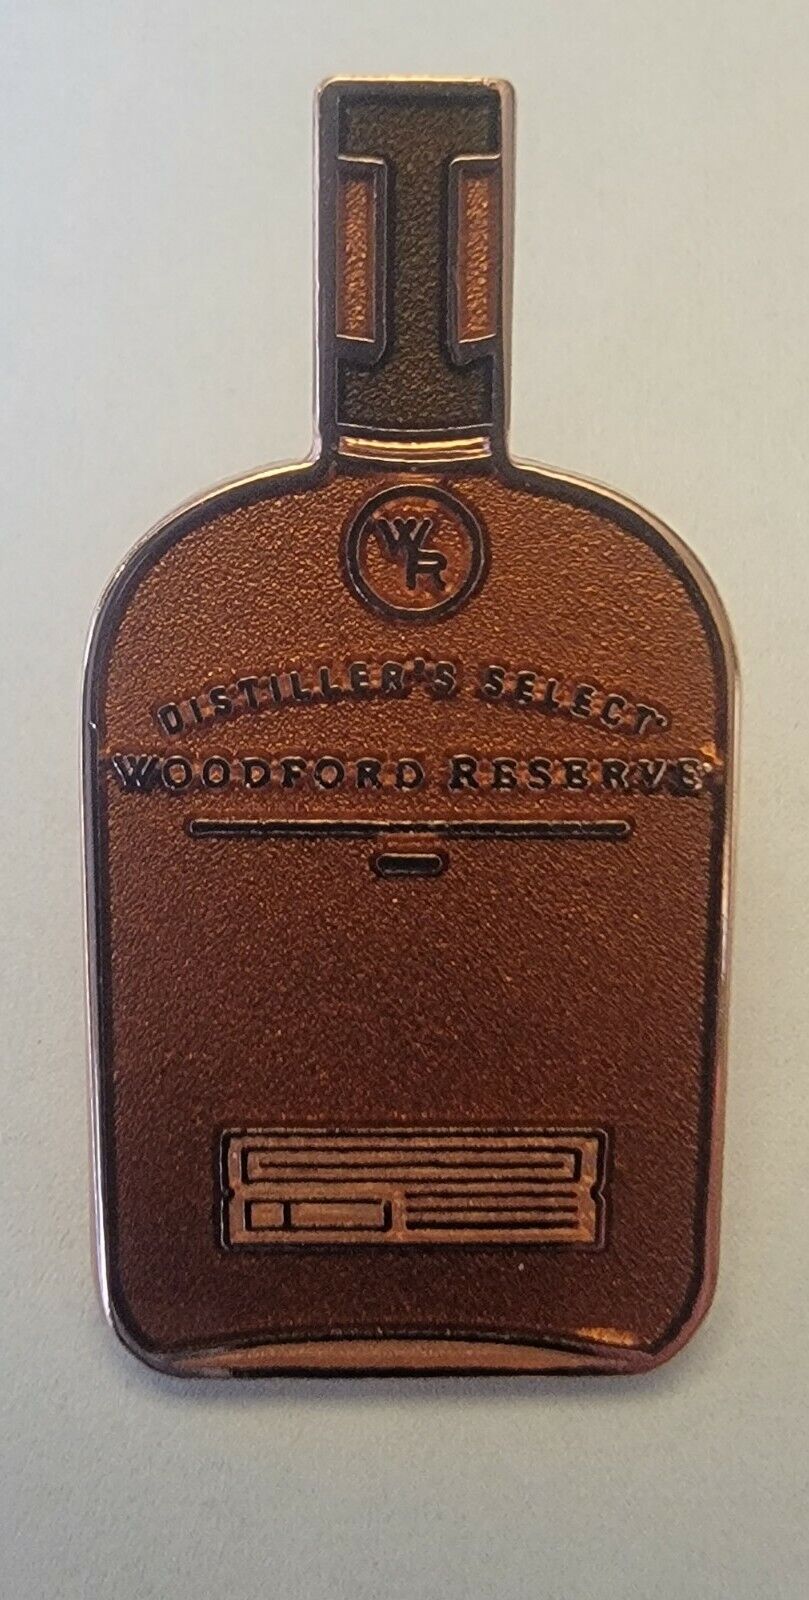 Woodford Reserve Lapel Pin Bottle Shaped Copper Color Mens Man Rare